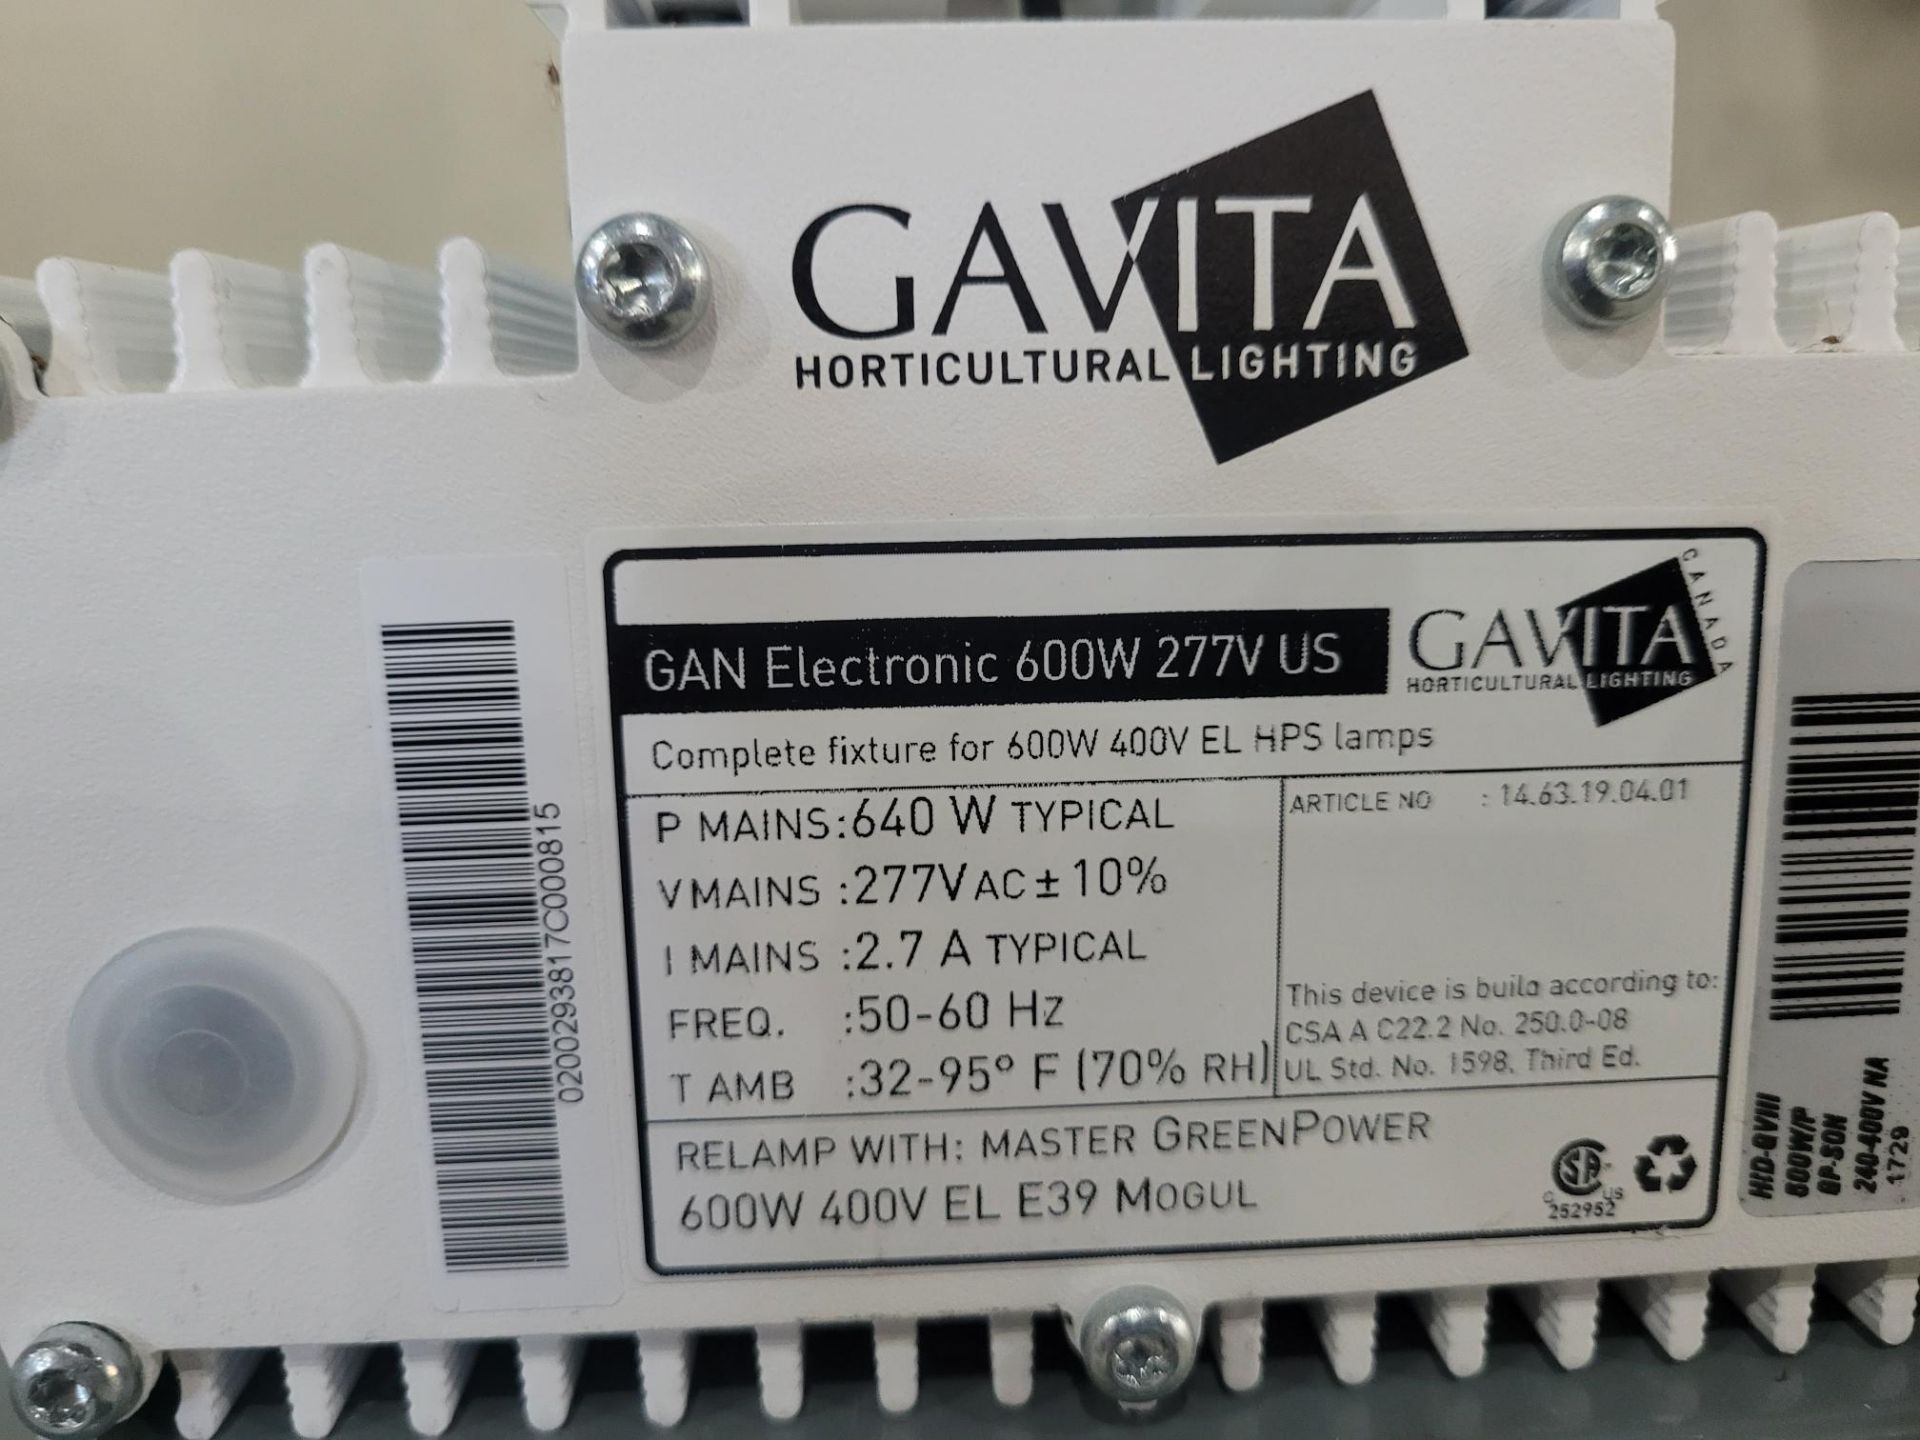 Lot of (50)- Used Gavita Pro Classic Grow Lights 600 SE Fixture 277V w/600 watt EL lamp bulbs - Image 6 of 7